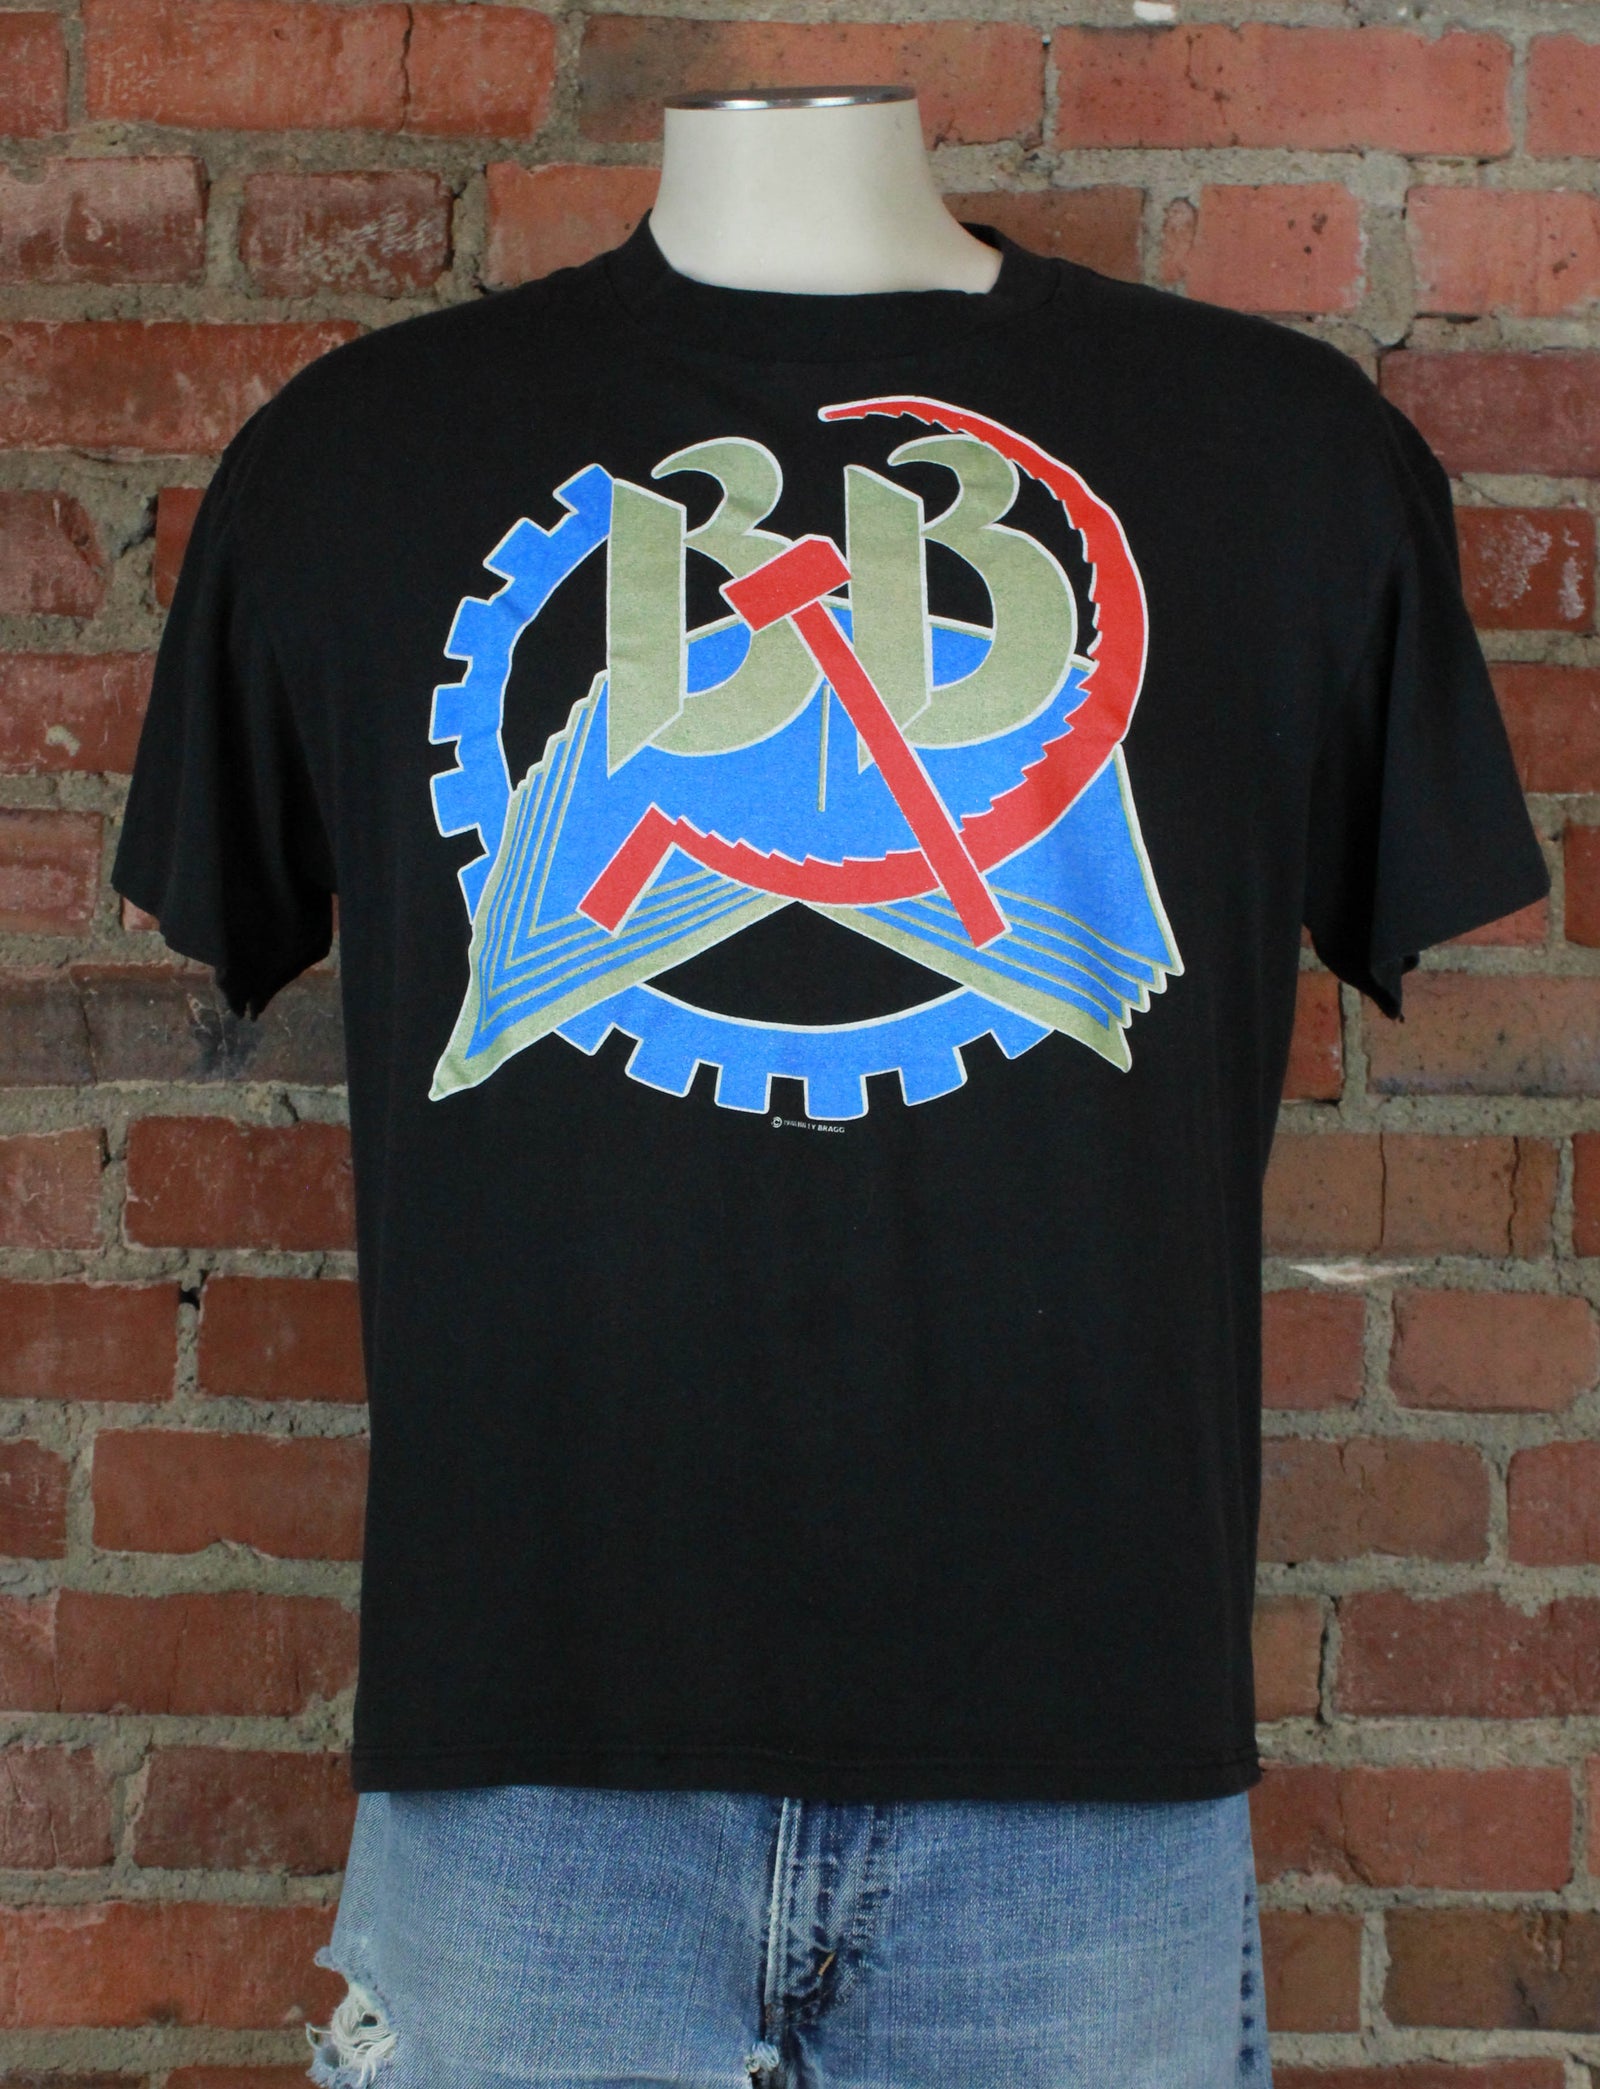 Vintage Billy Bragg Concert T Shirt 1988 USA Spring Tour - XL